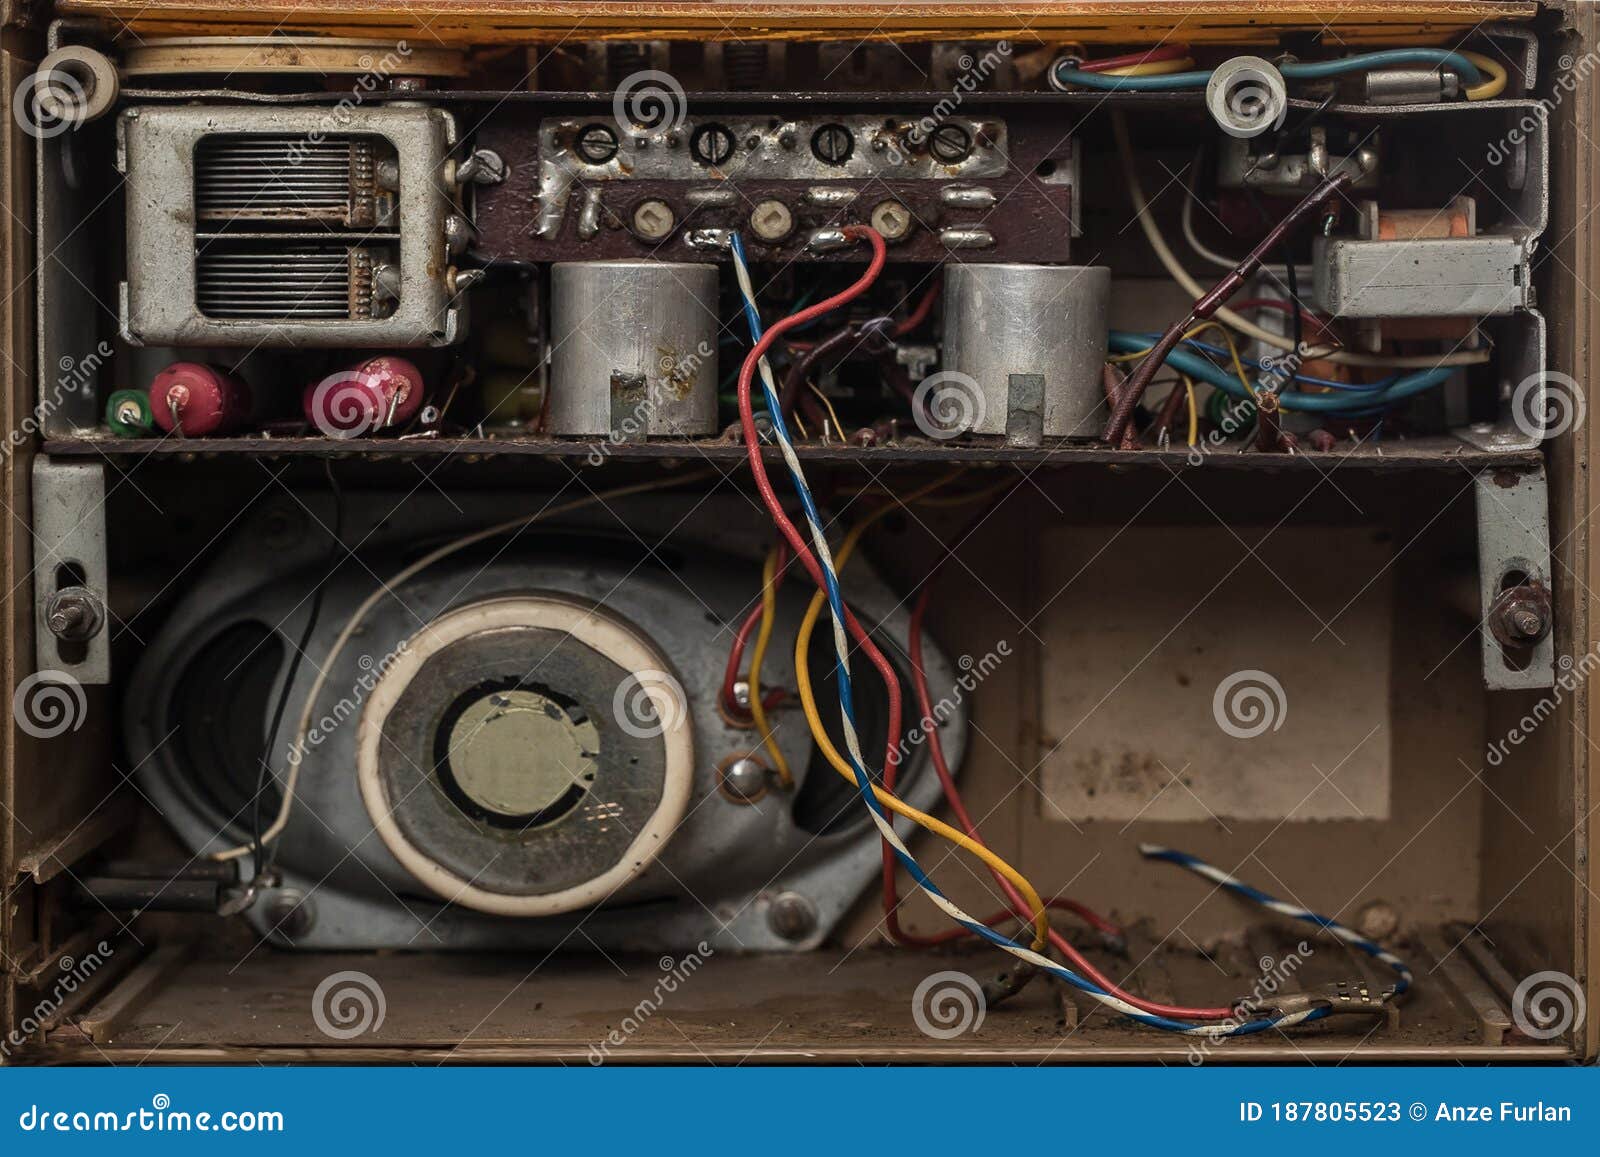 Old transistor radio stock image. Image of board, engineering - 187805523